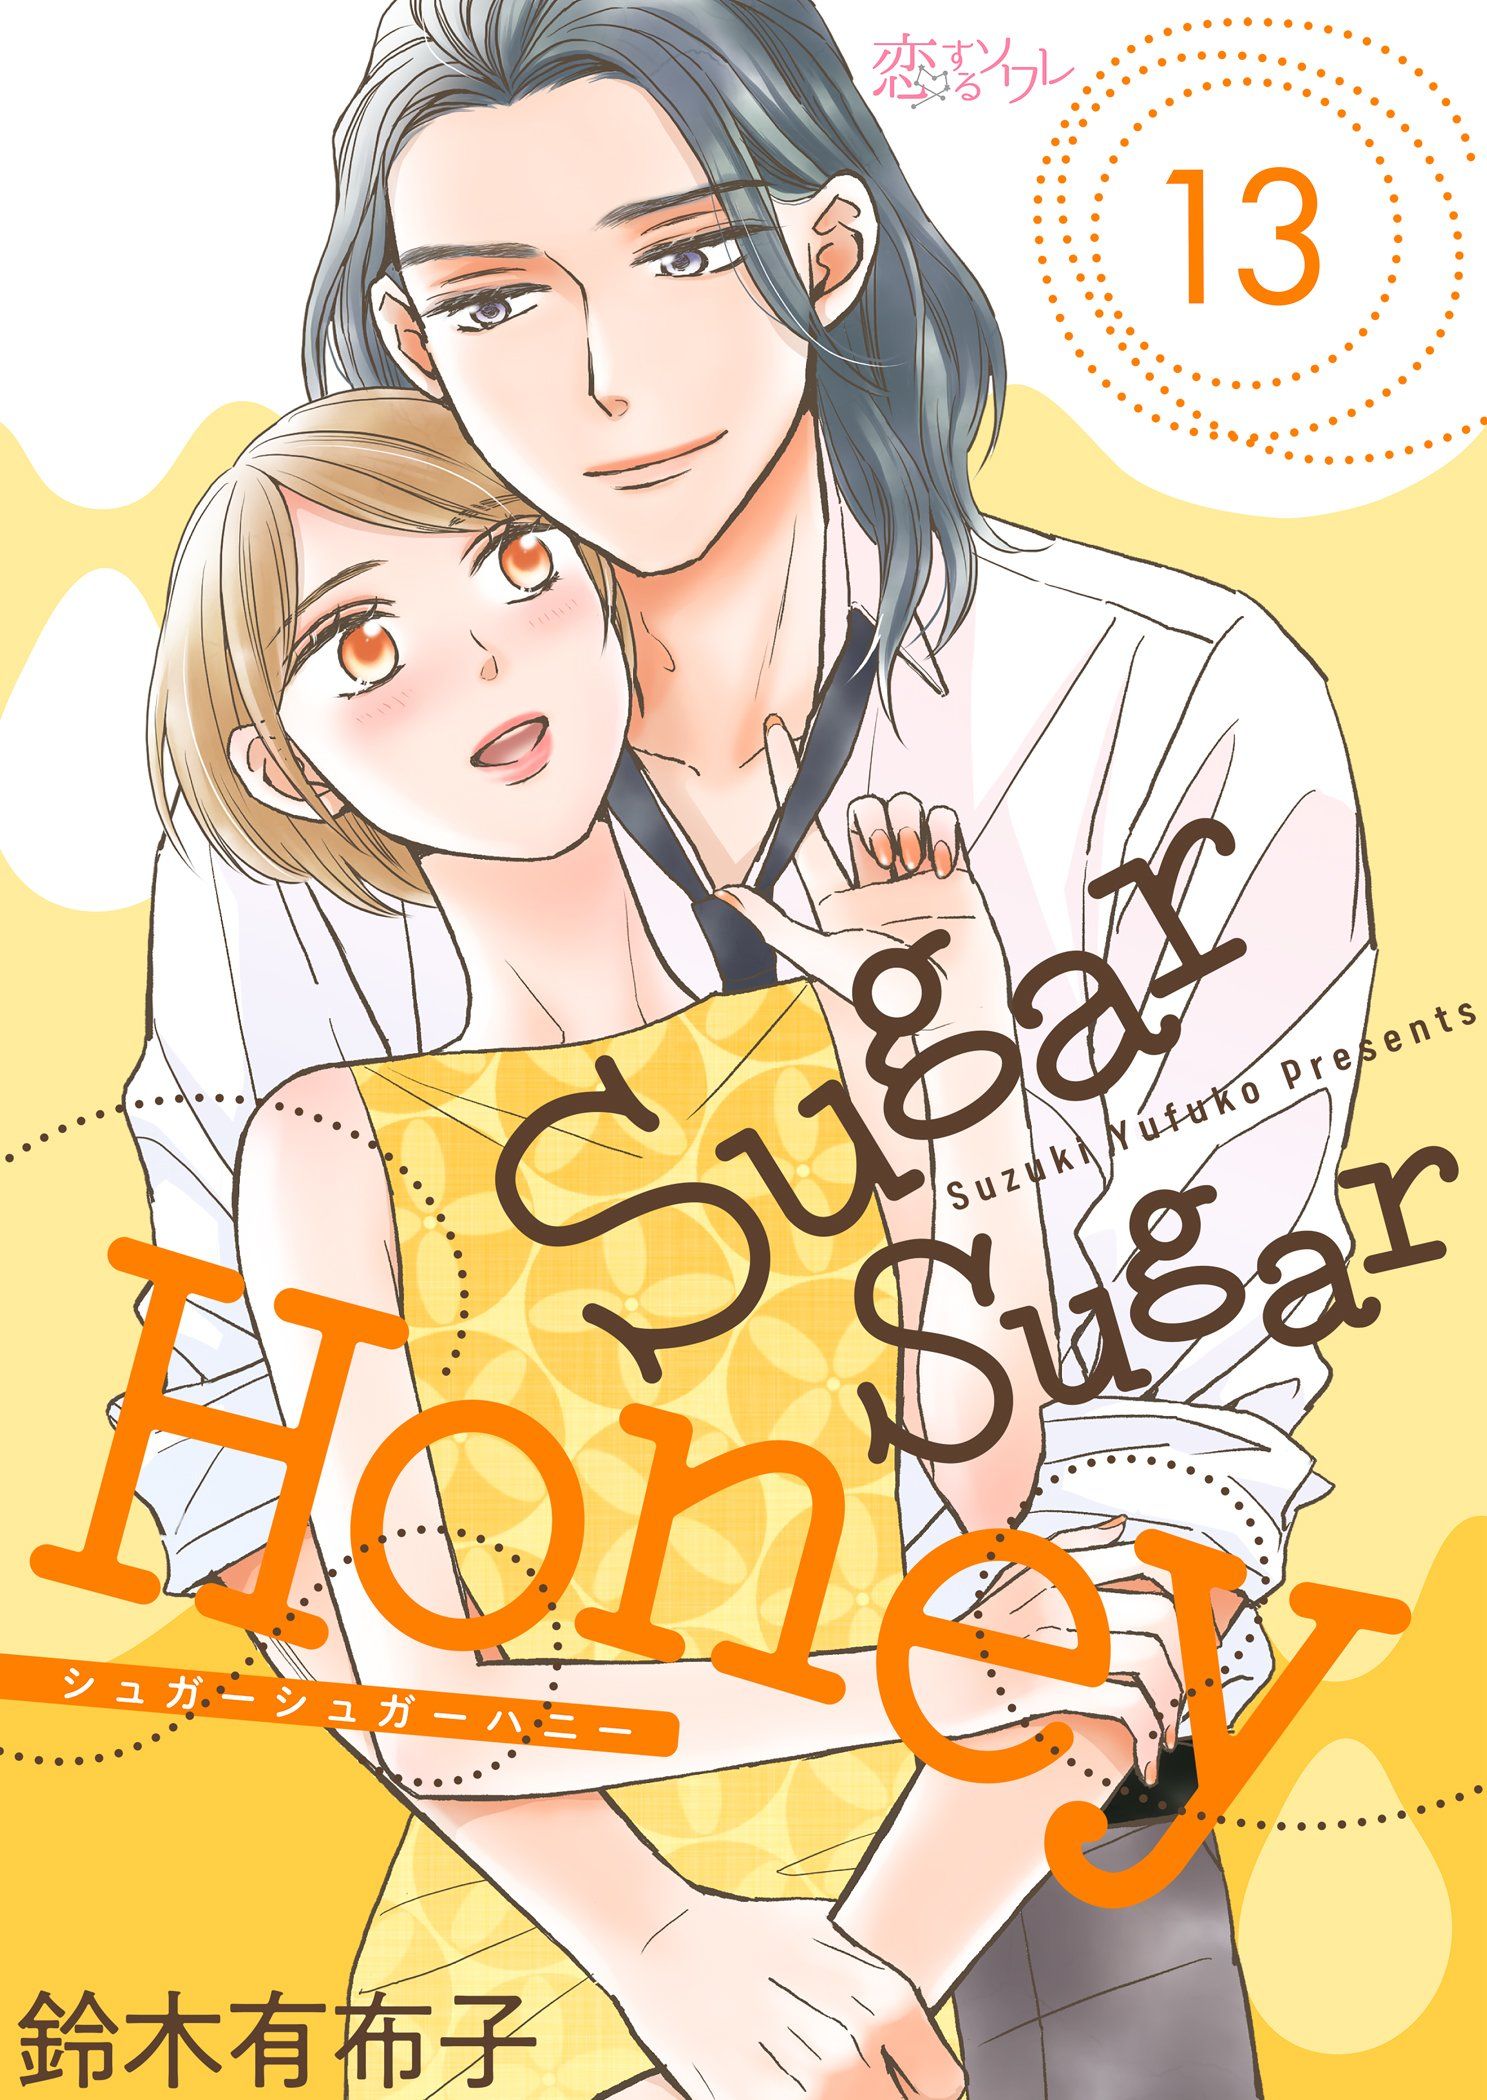 Sugar Sugar Honey 13 - 鈴木有布子 - 少女マンガ・無料試し読みなら、電子書籍・コミックストア ブックライブ